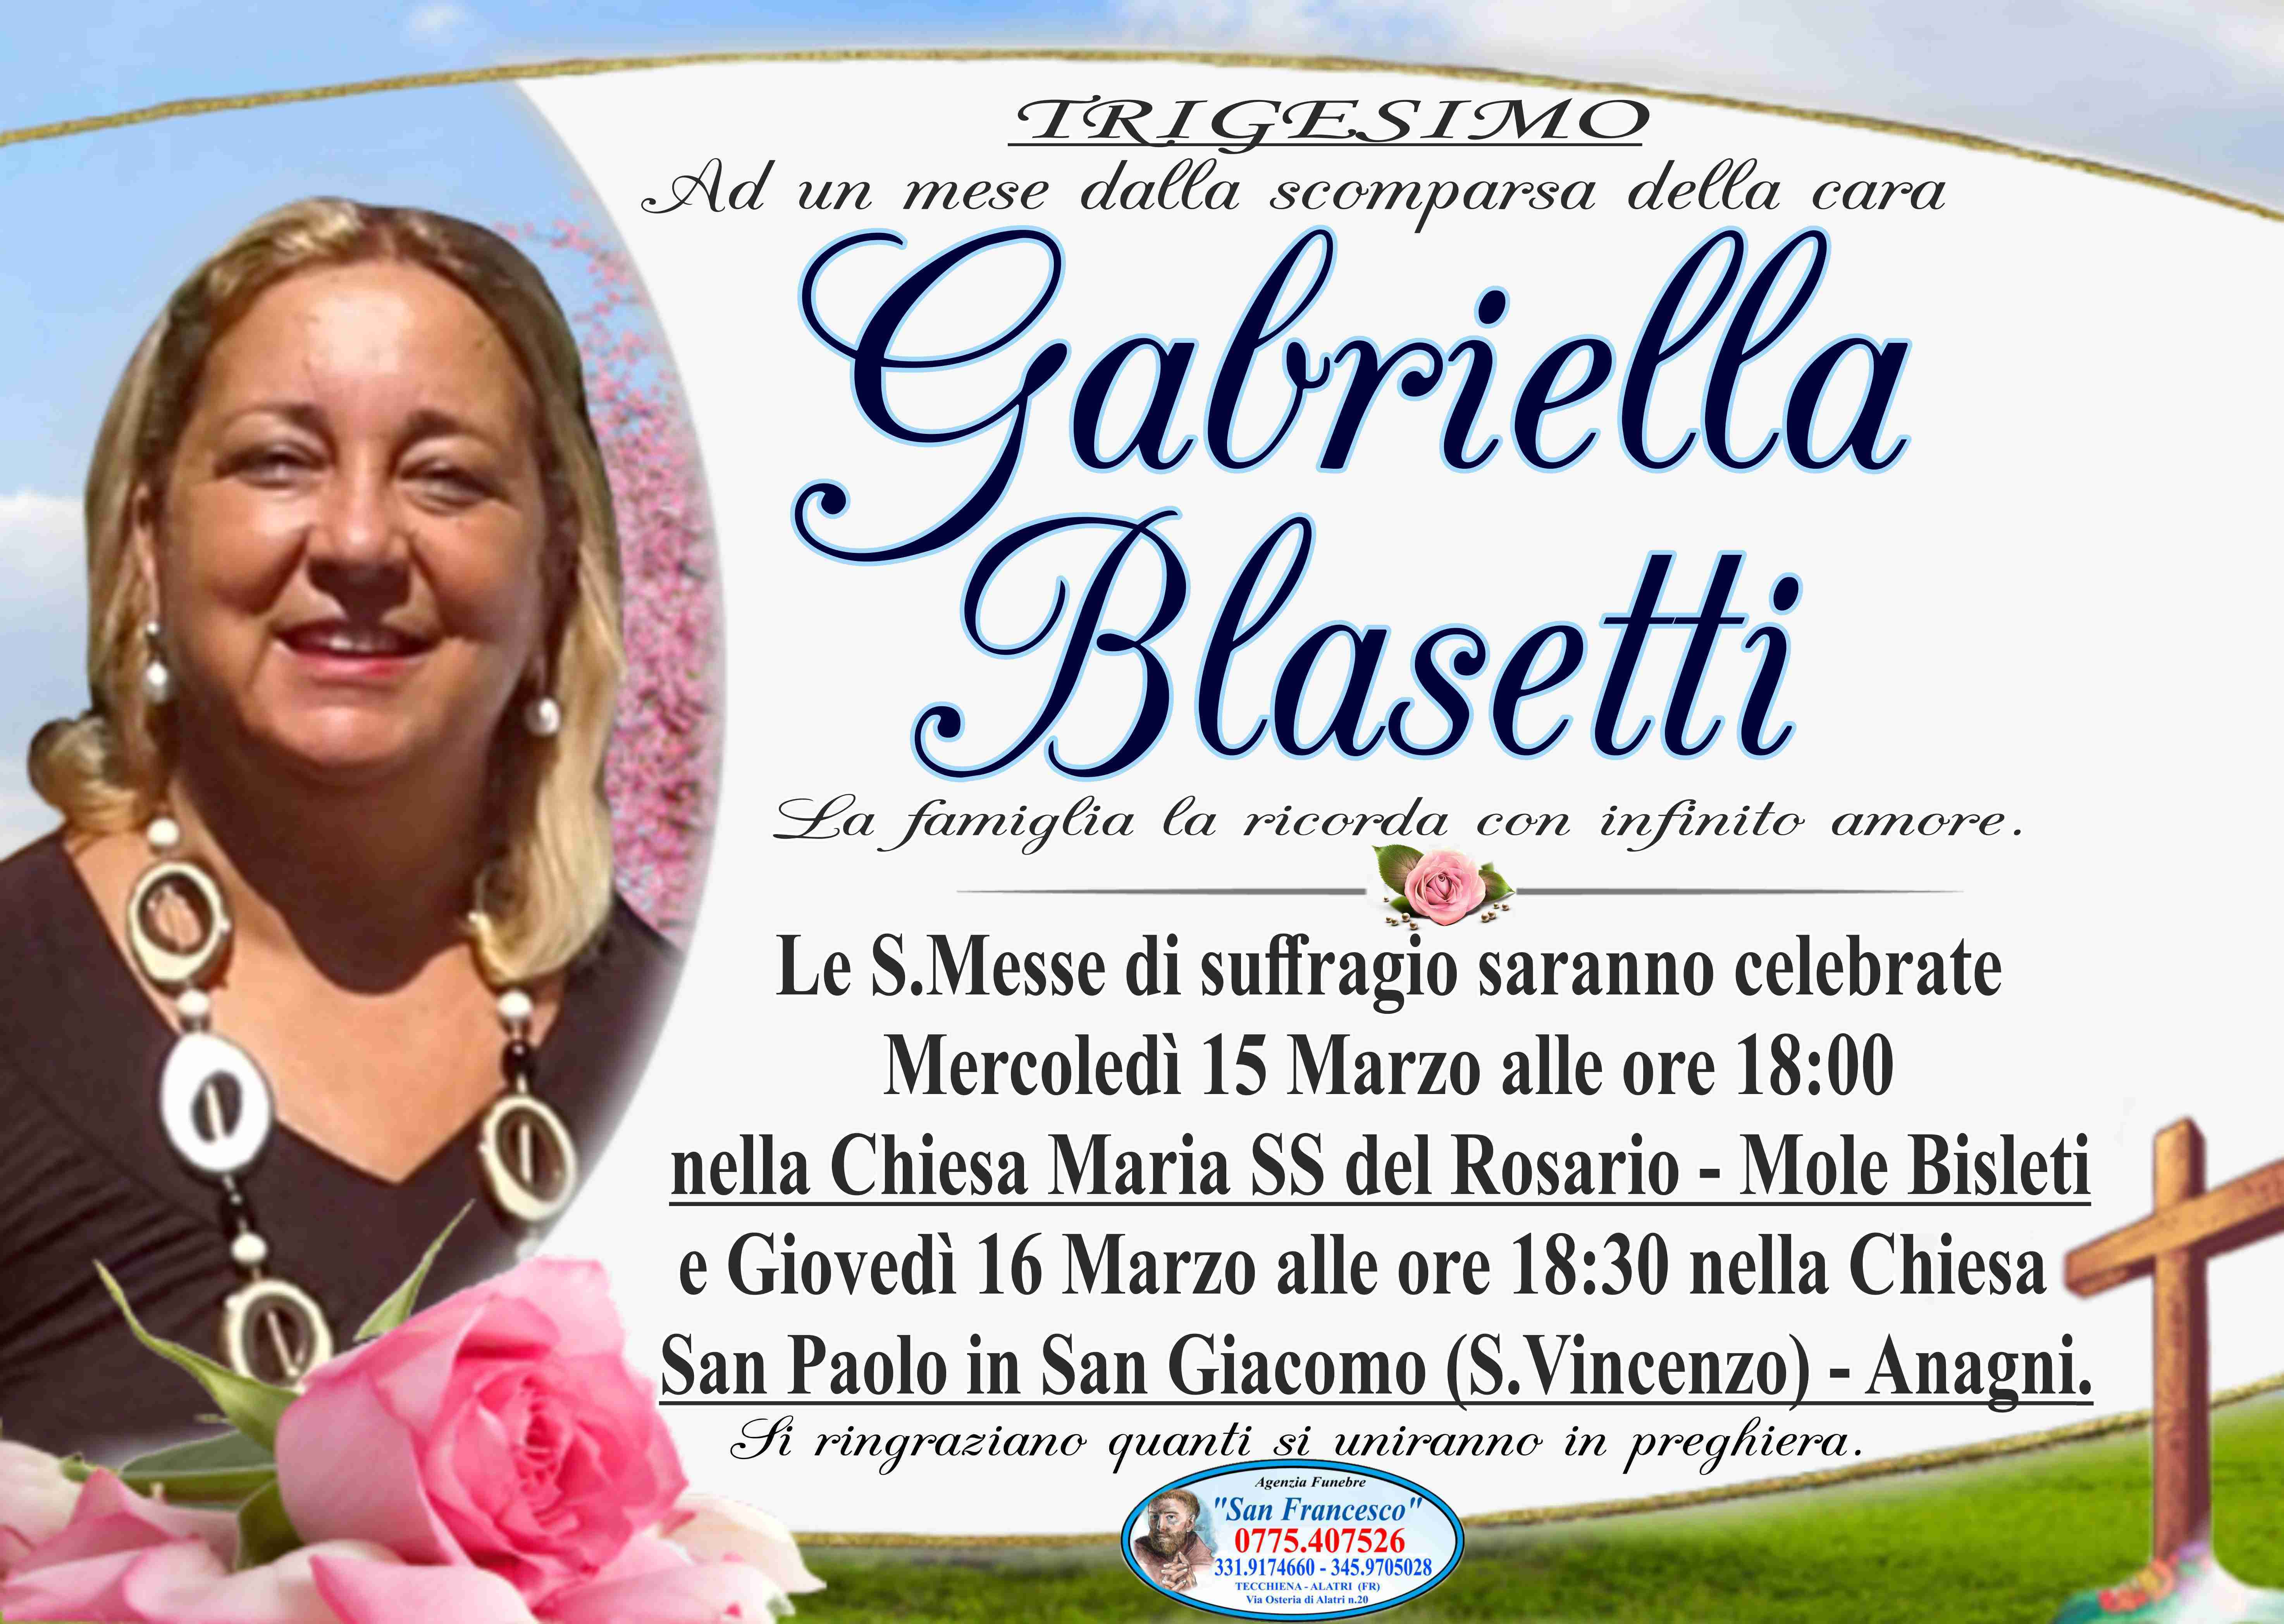 Gabriella Blasetti